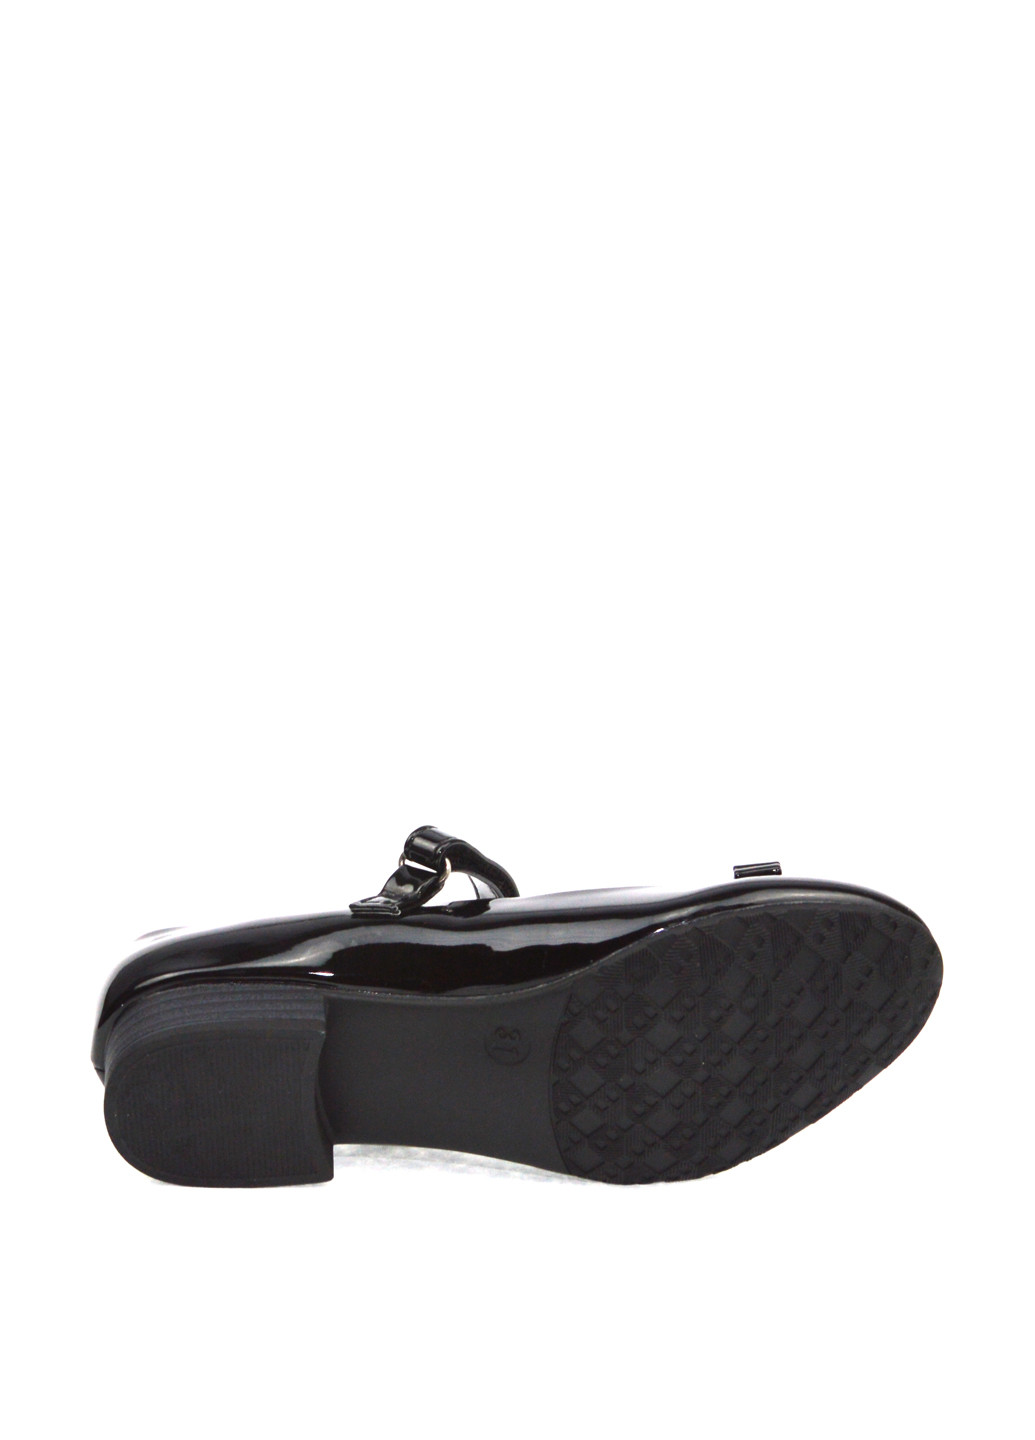 Черные туфли на низком каблуке Clibee